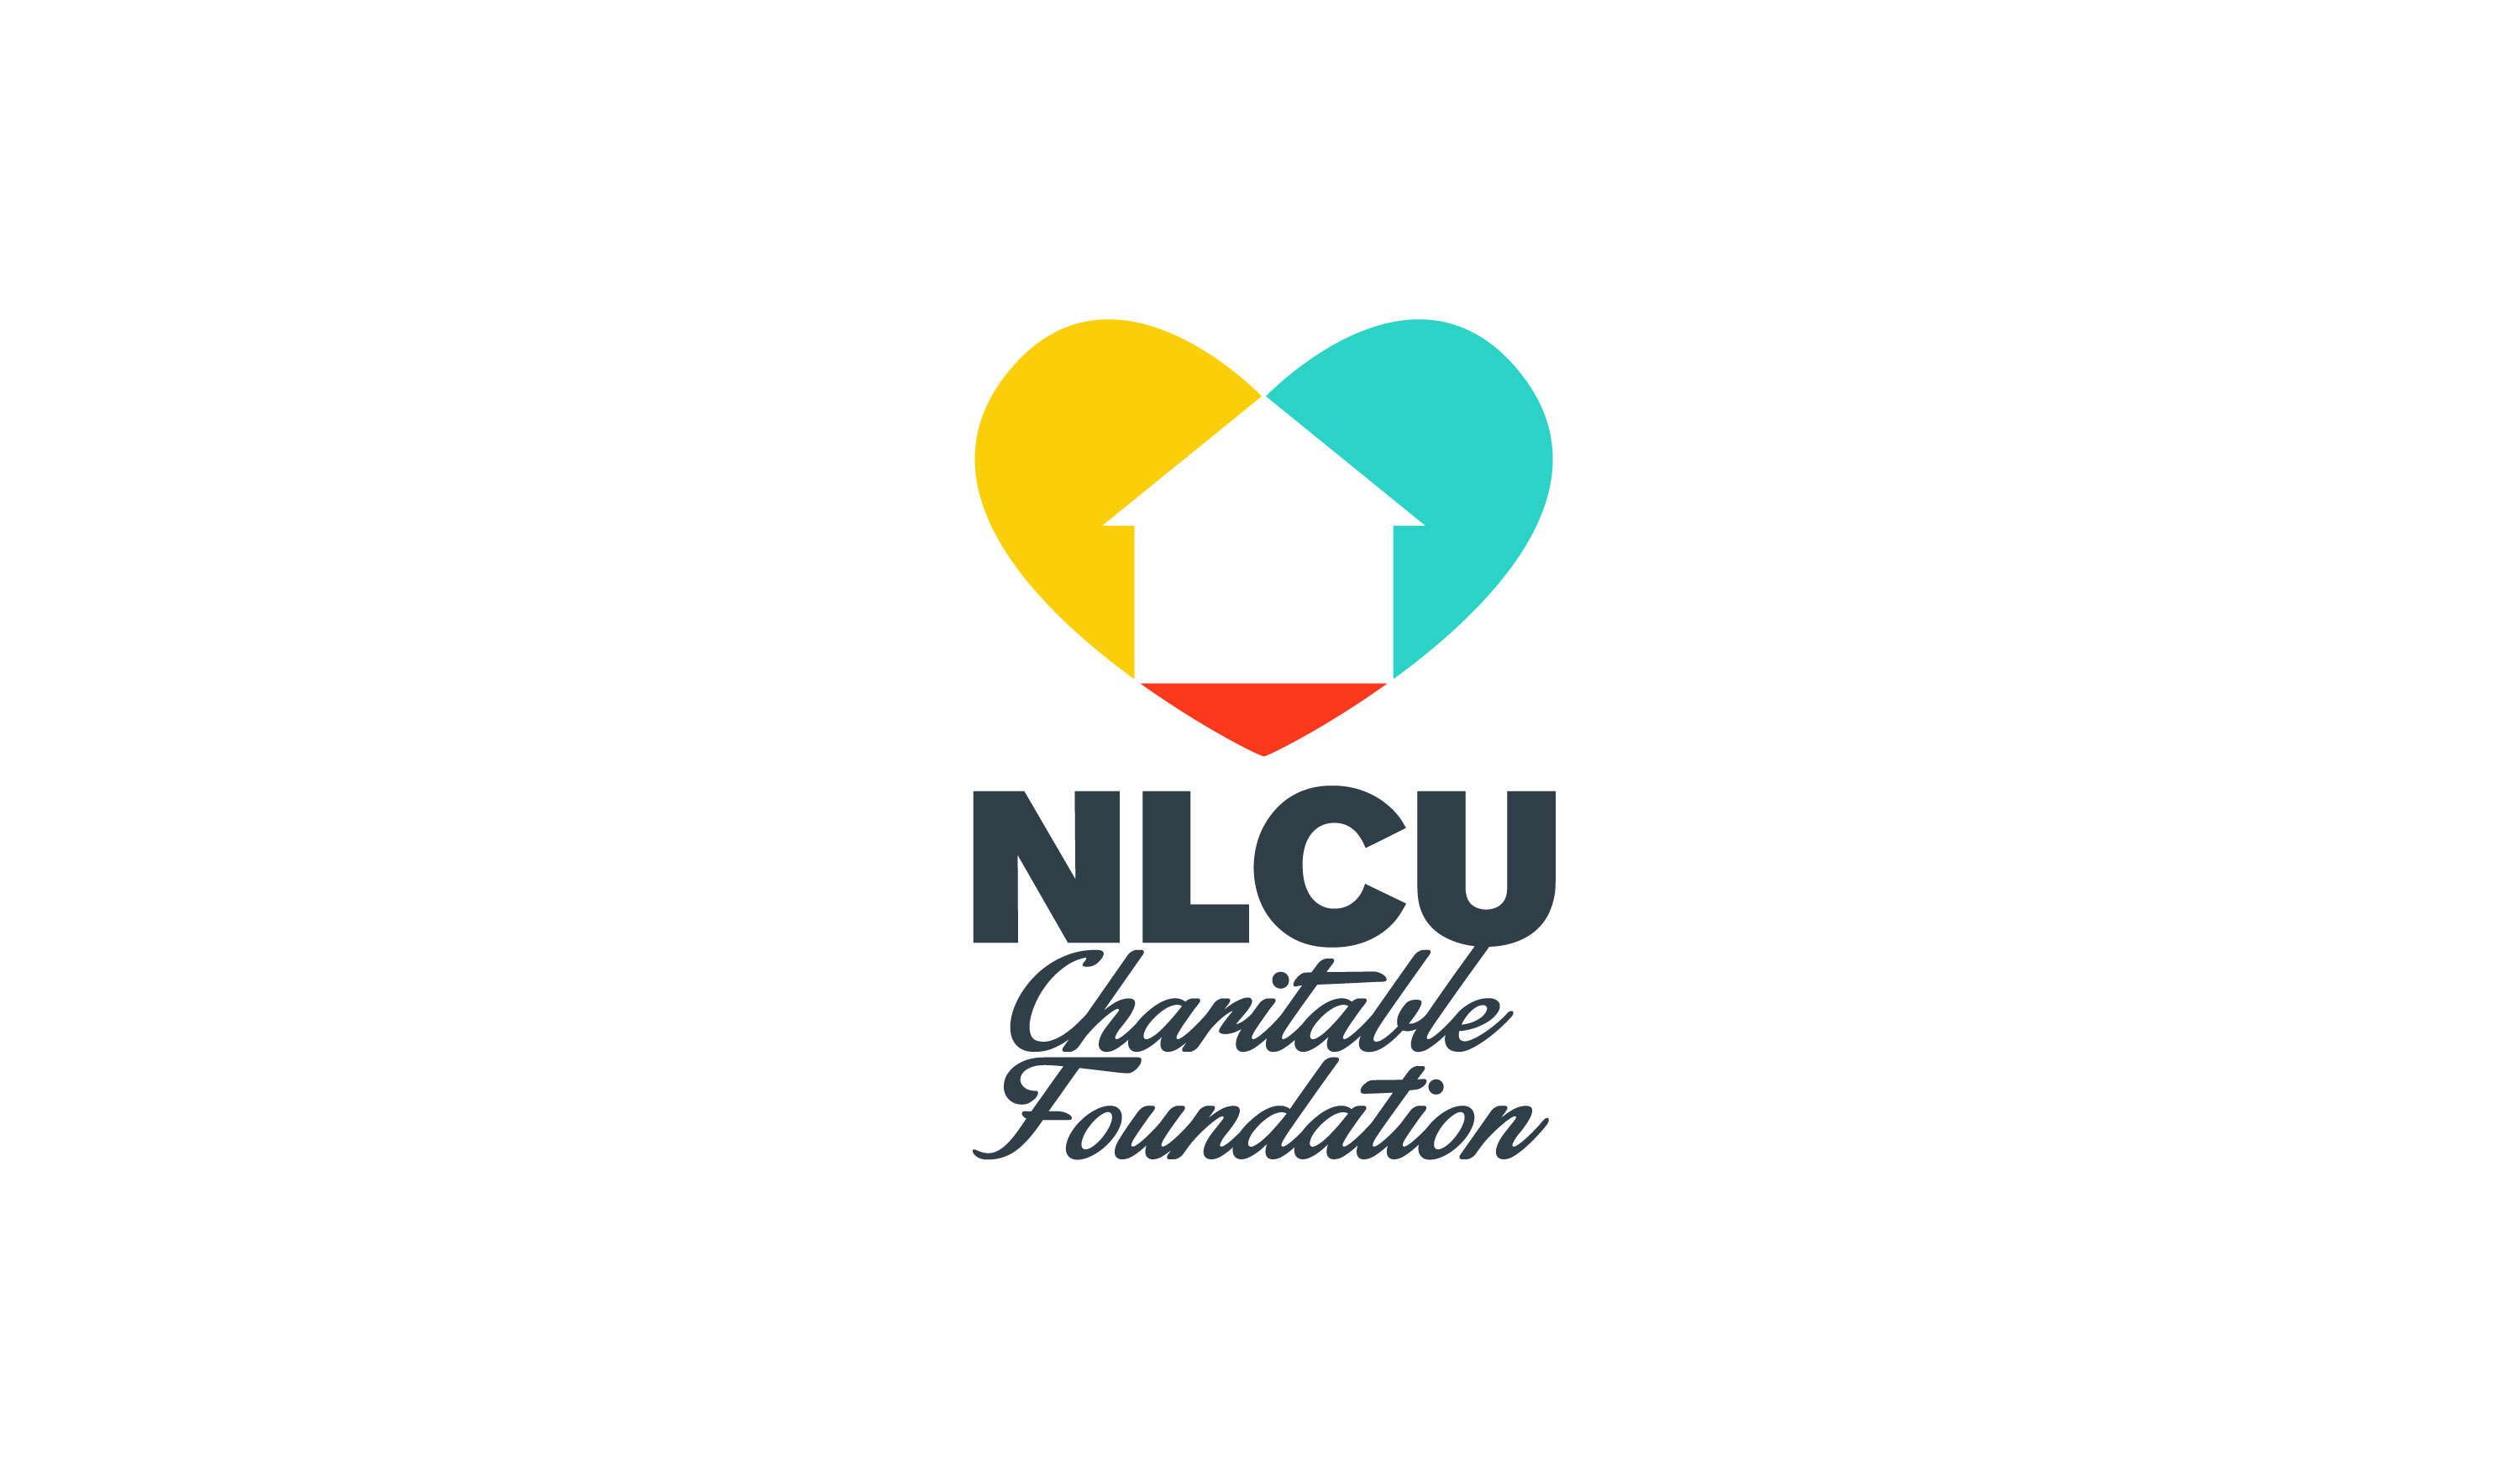 NLCU Charitable Foundation